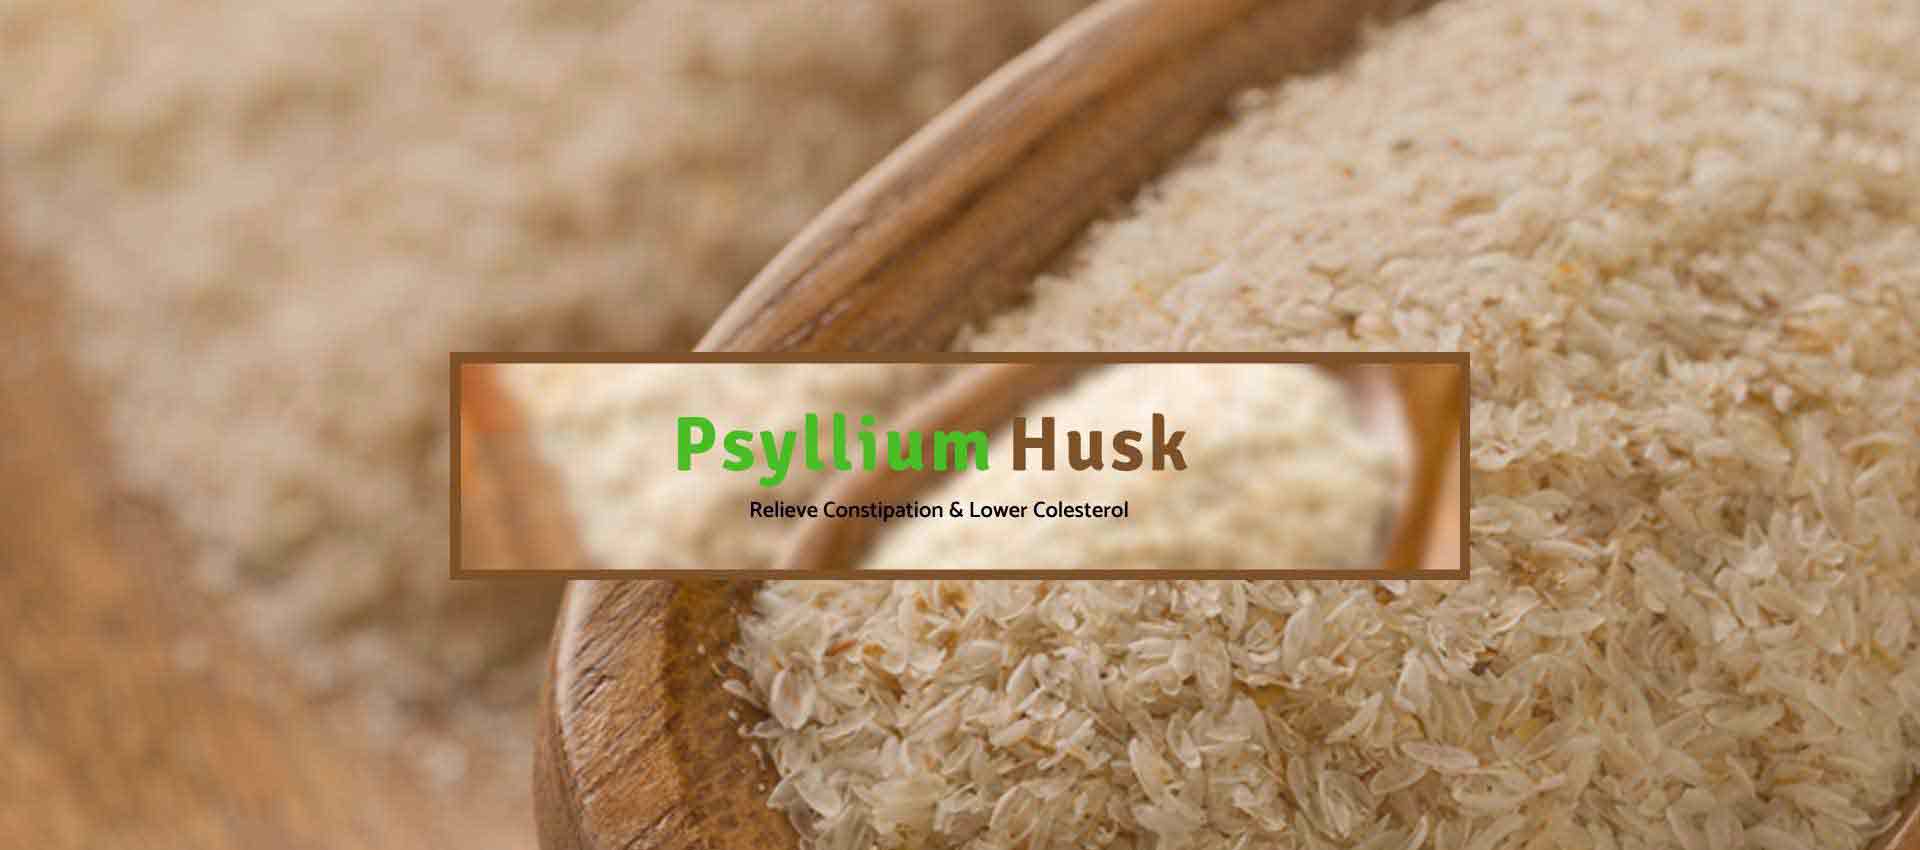 Psyllium Husk Manufacturers in France